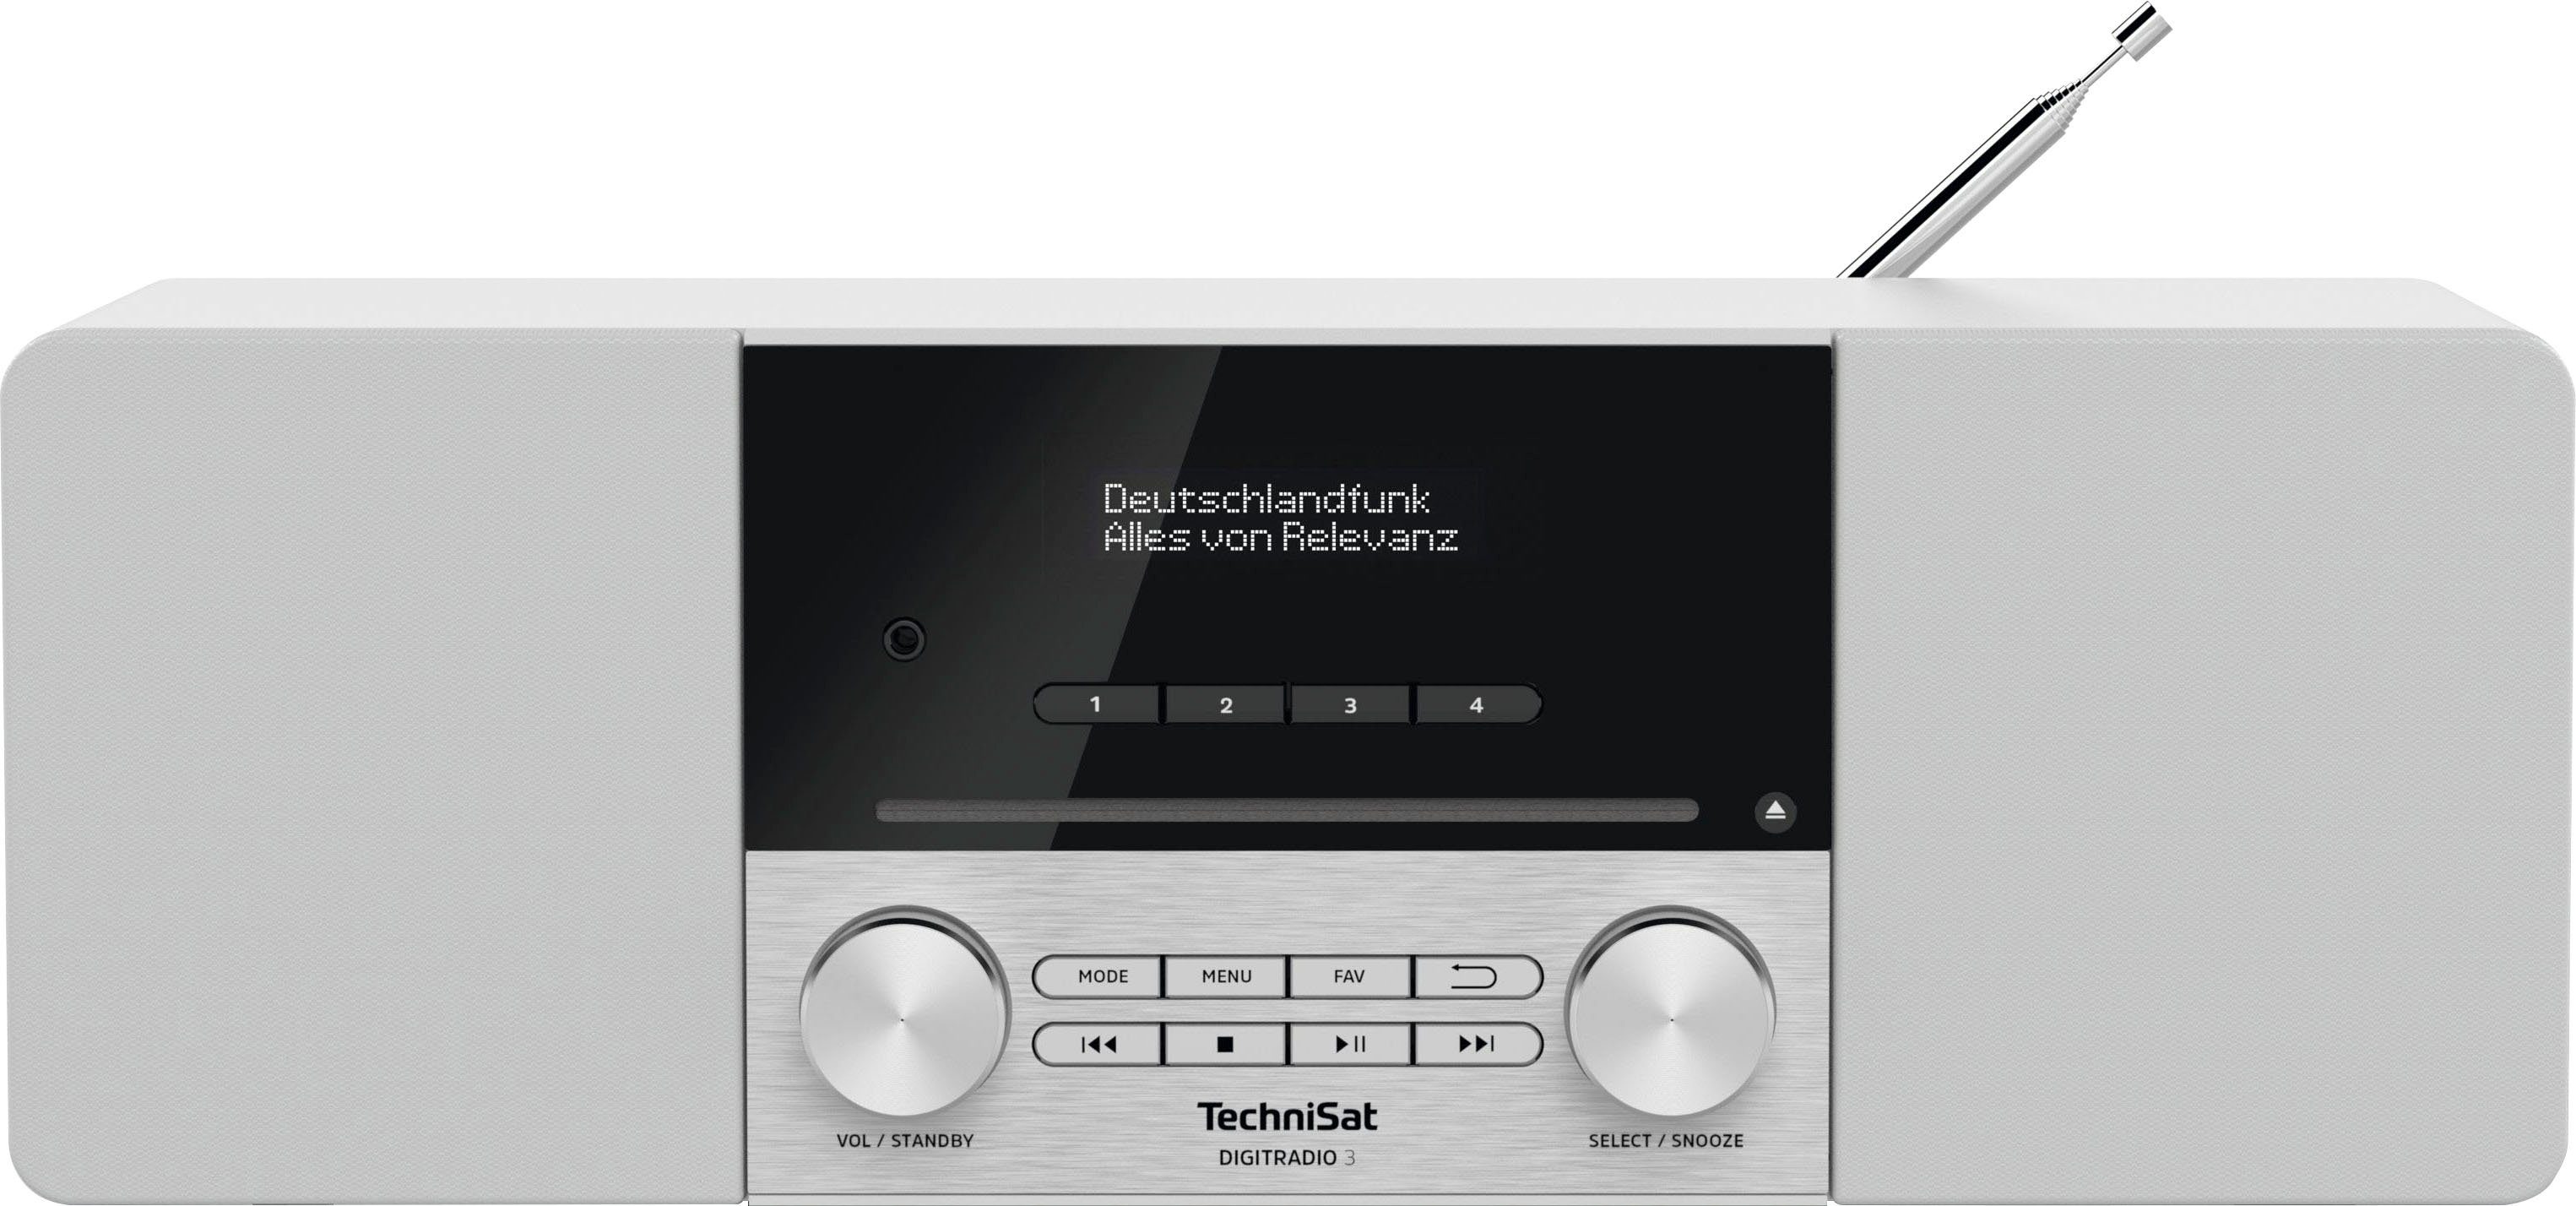 Digitalradio DIGITRADIO Made 3 (DAB) TechniSat RDS, in weiß (Digitalradio CD-Player, UKW Germany) mit W, (DAB), 20